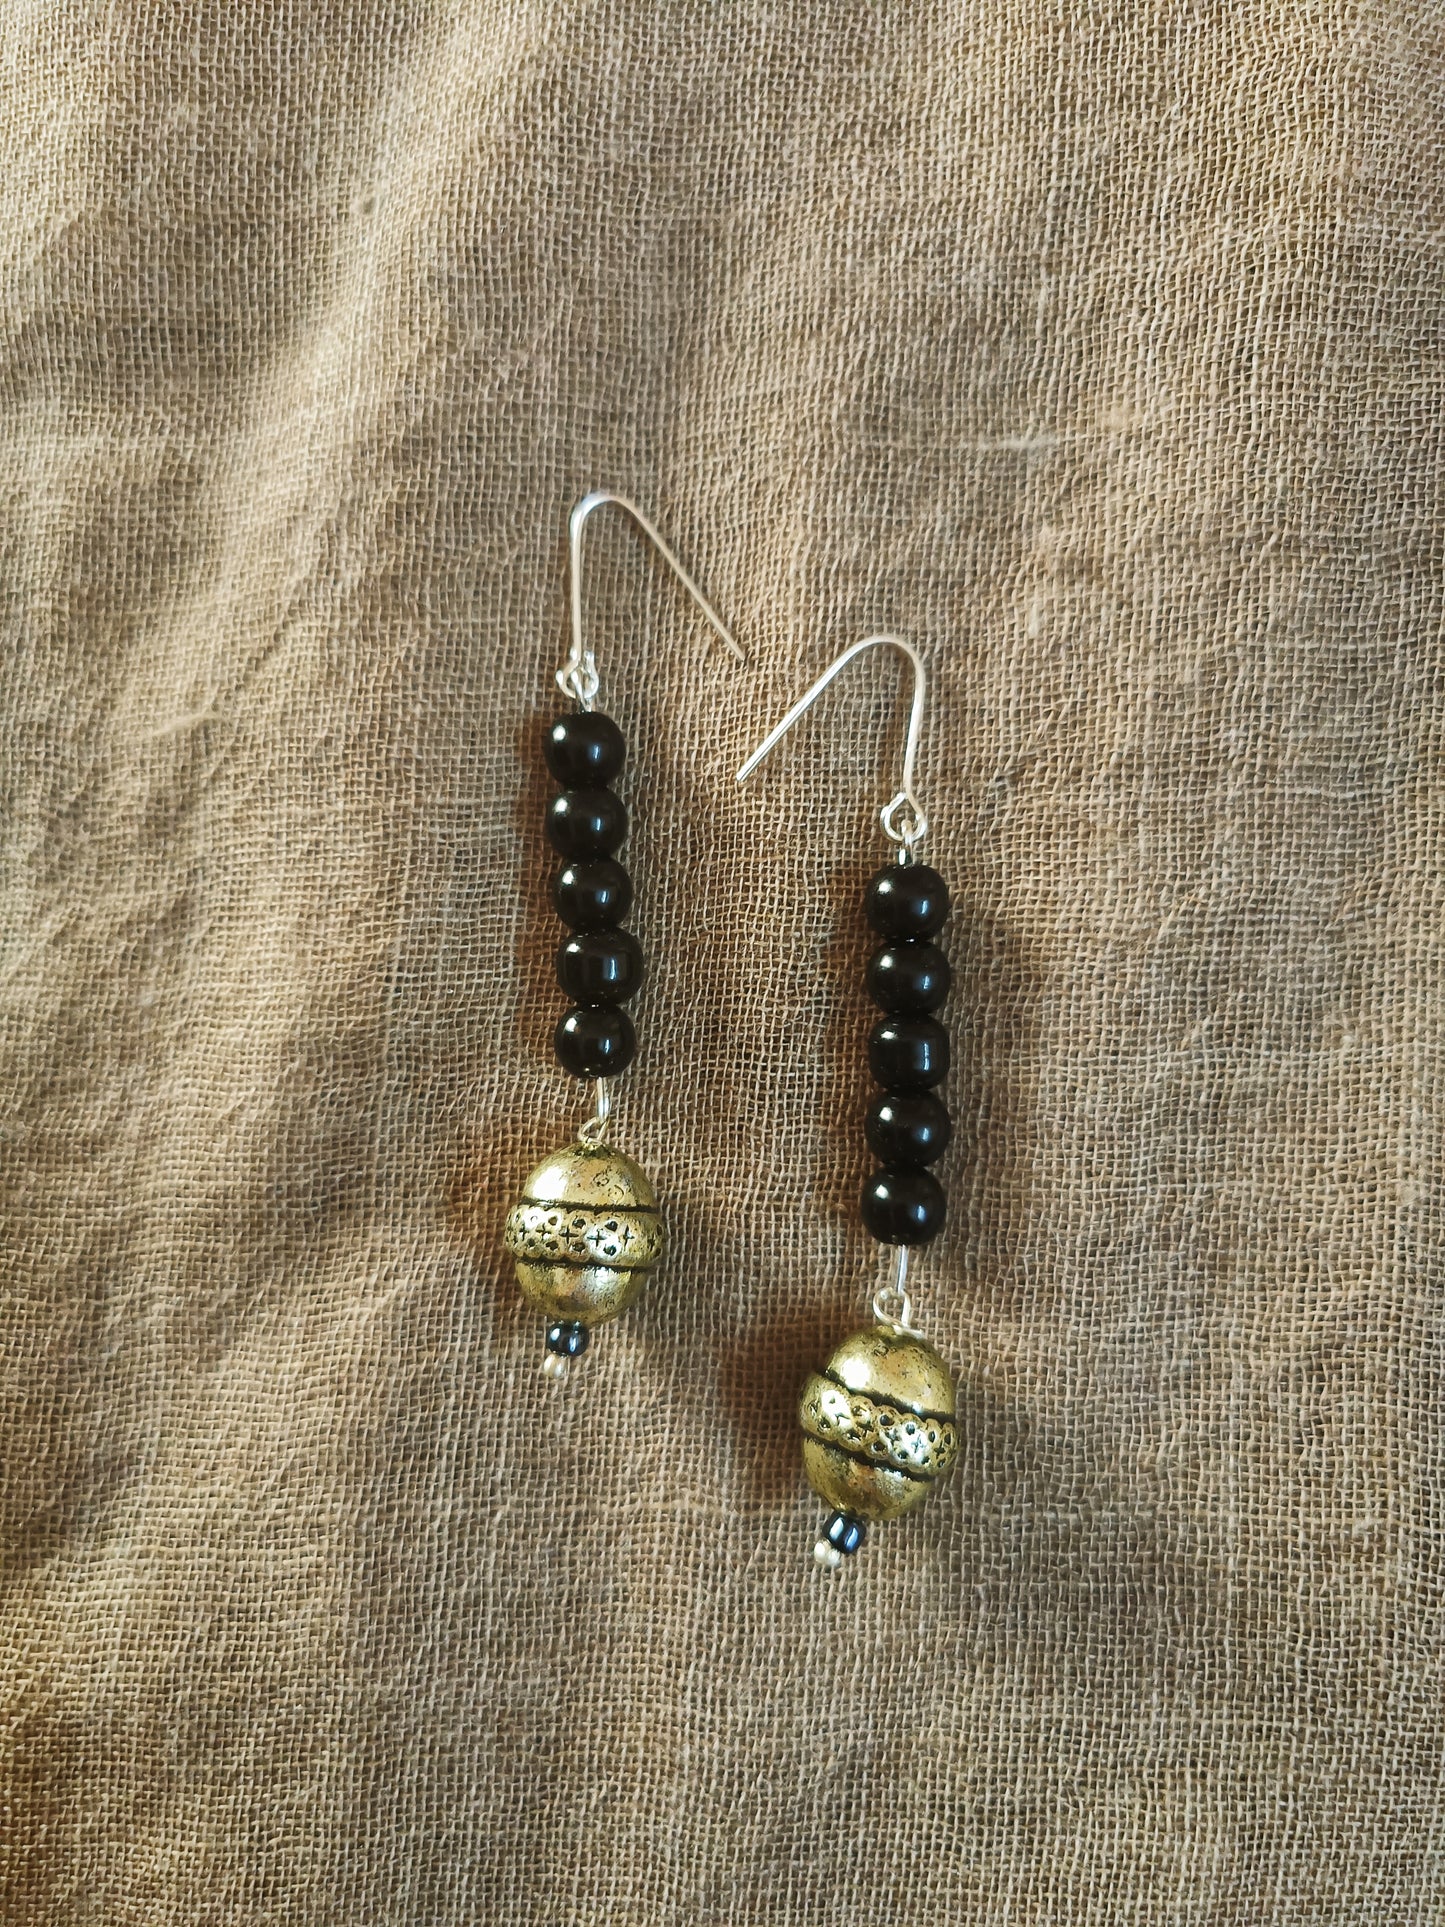 Small hanging earrings Feb